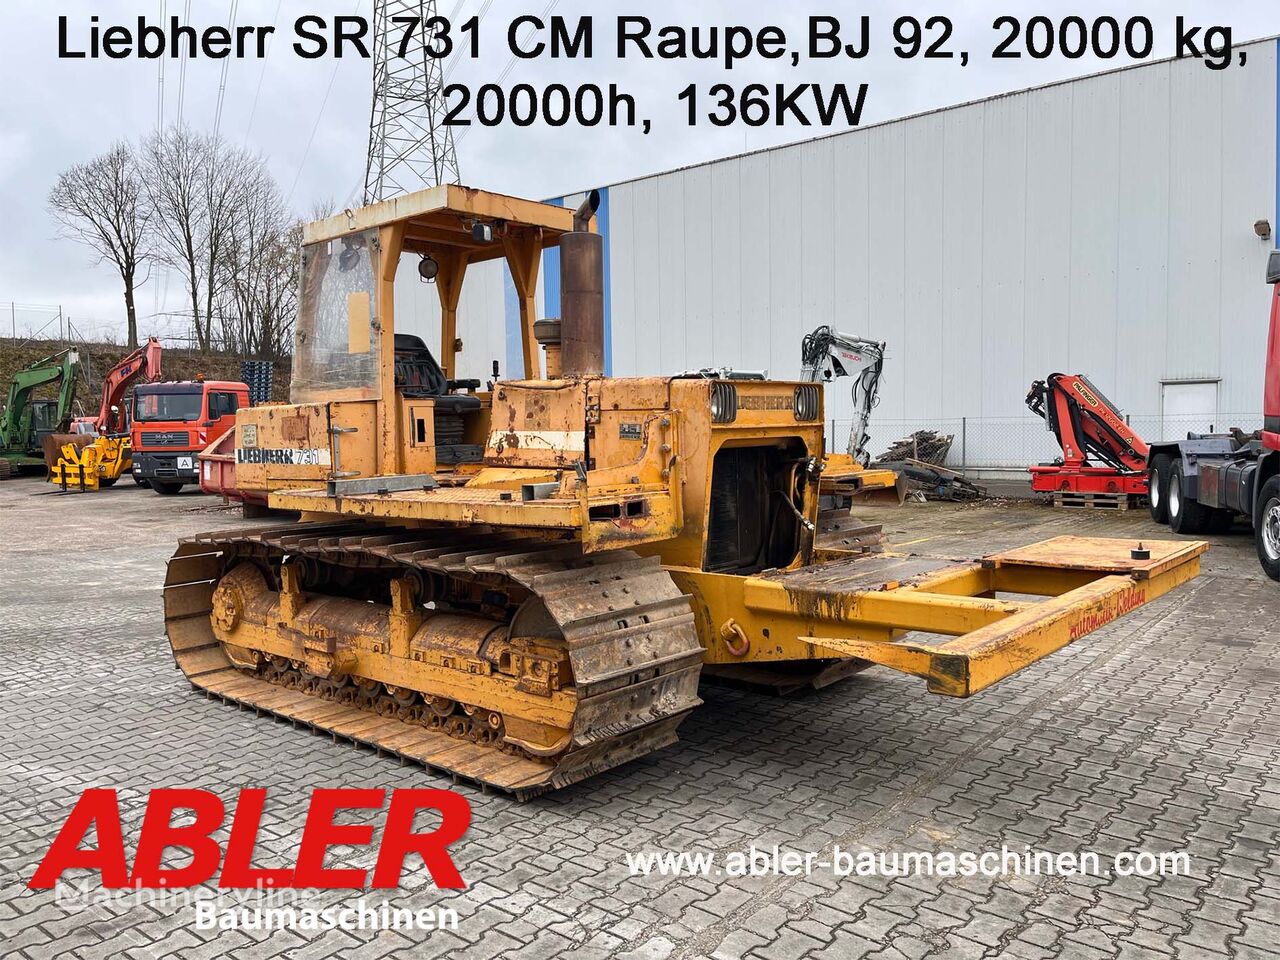 Liebherr SR 731 CM bulldozer